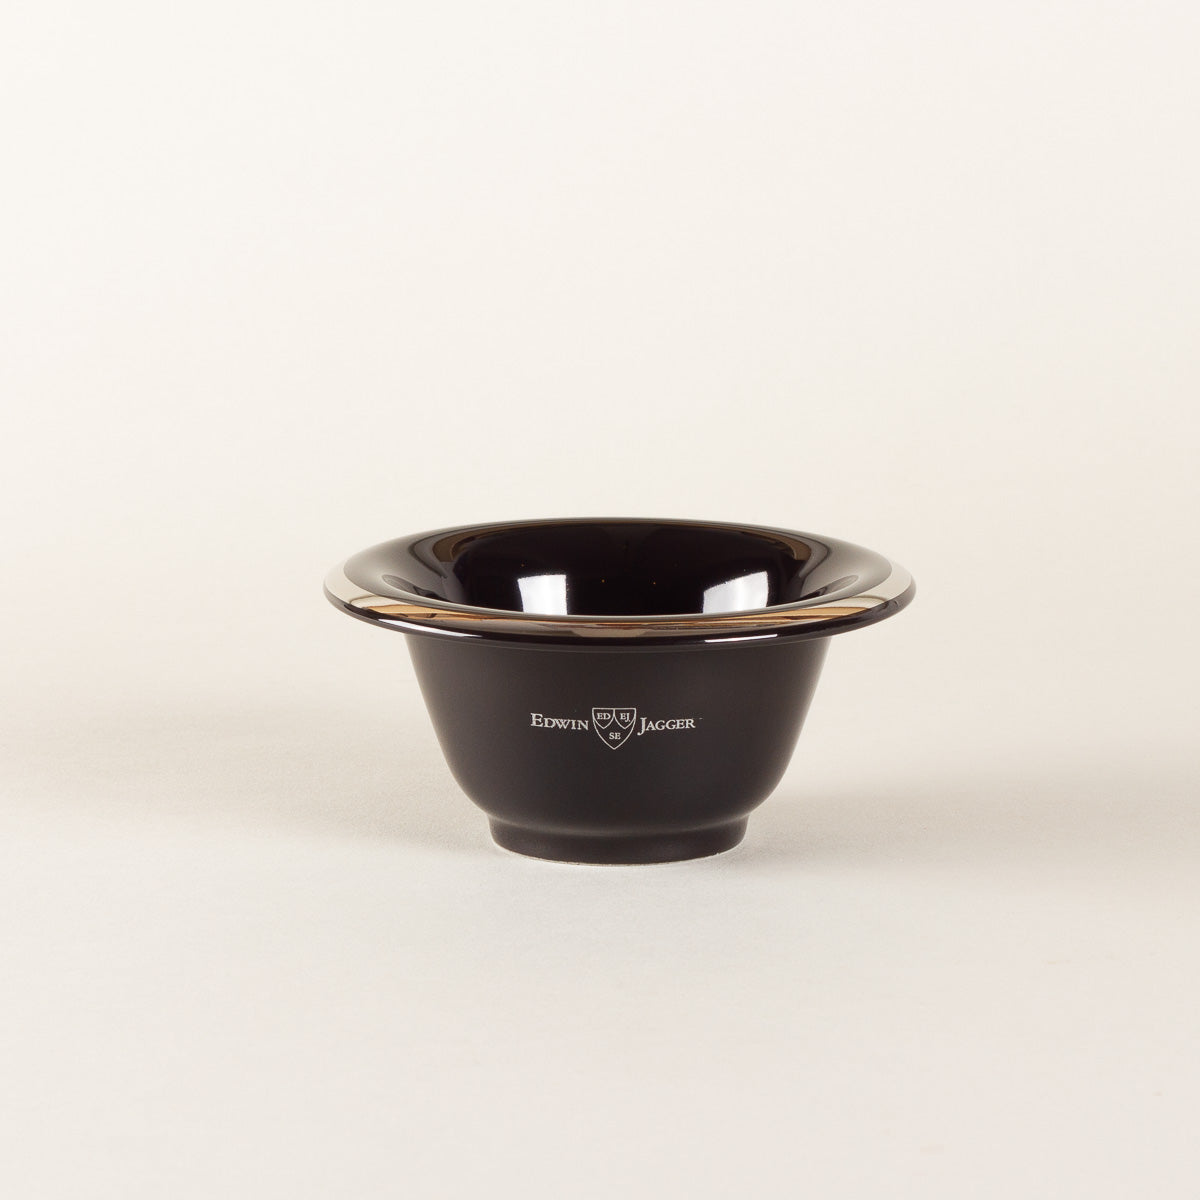 Edwin Jagger Porcelain shaving bowl with silver rim - black